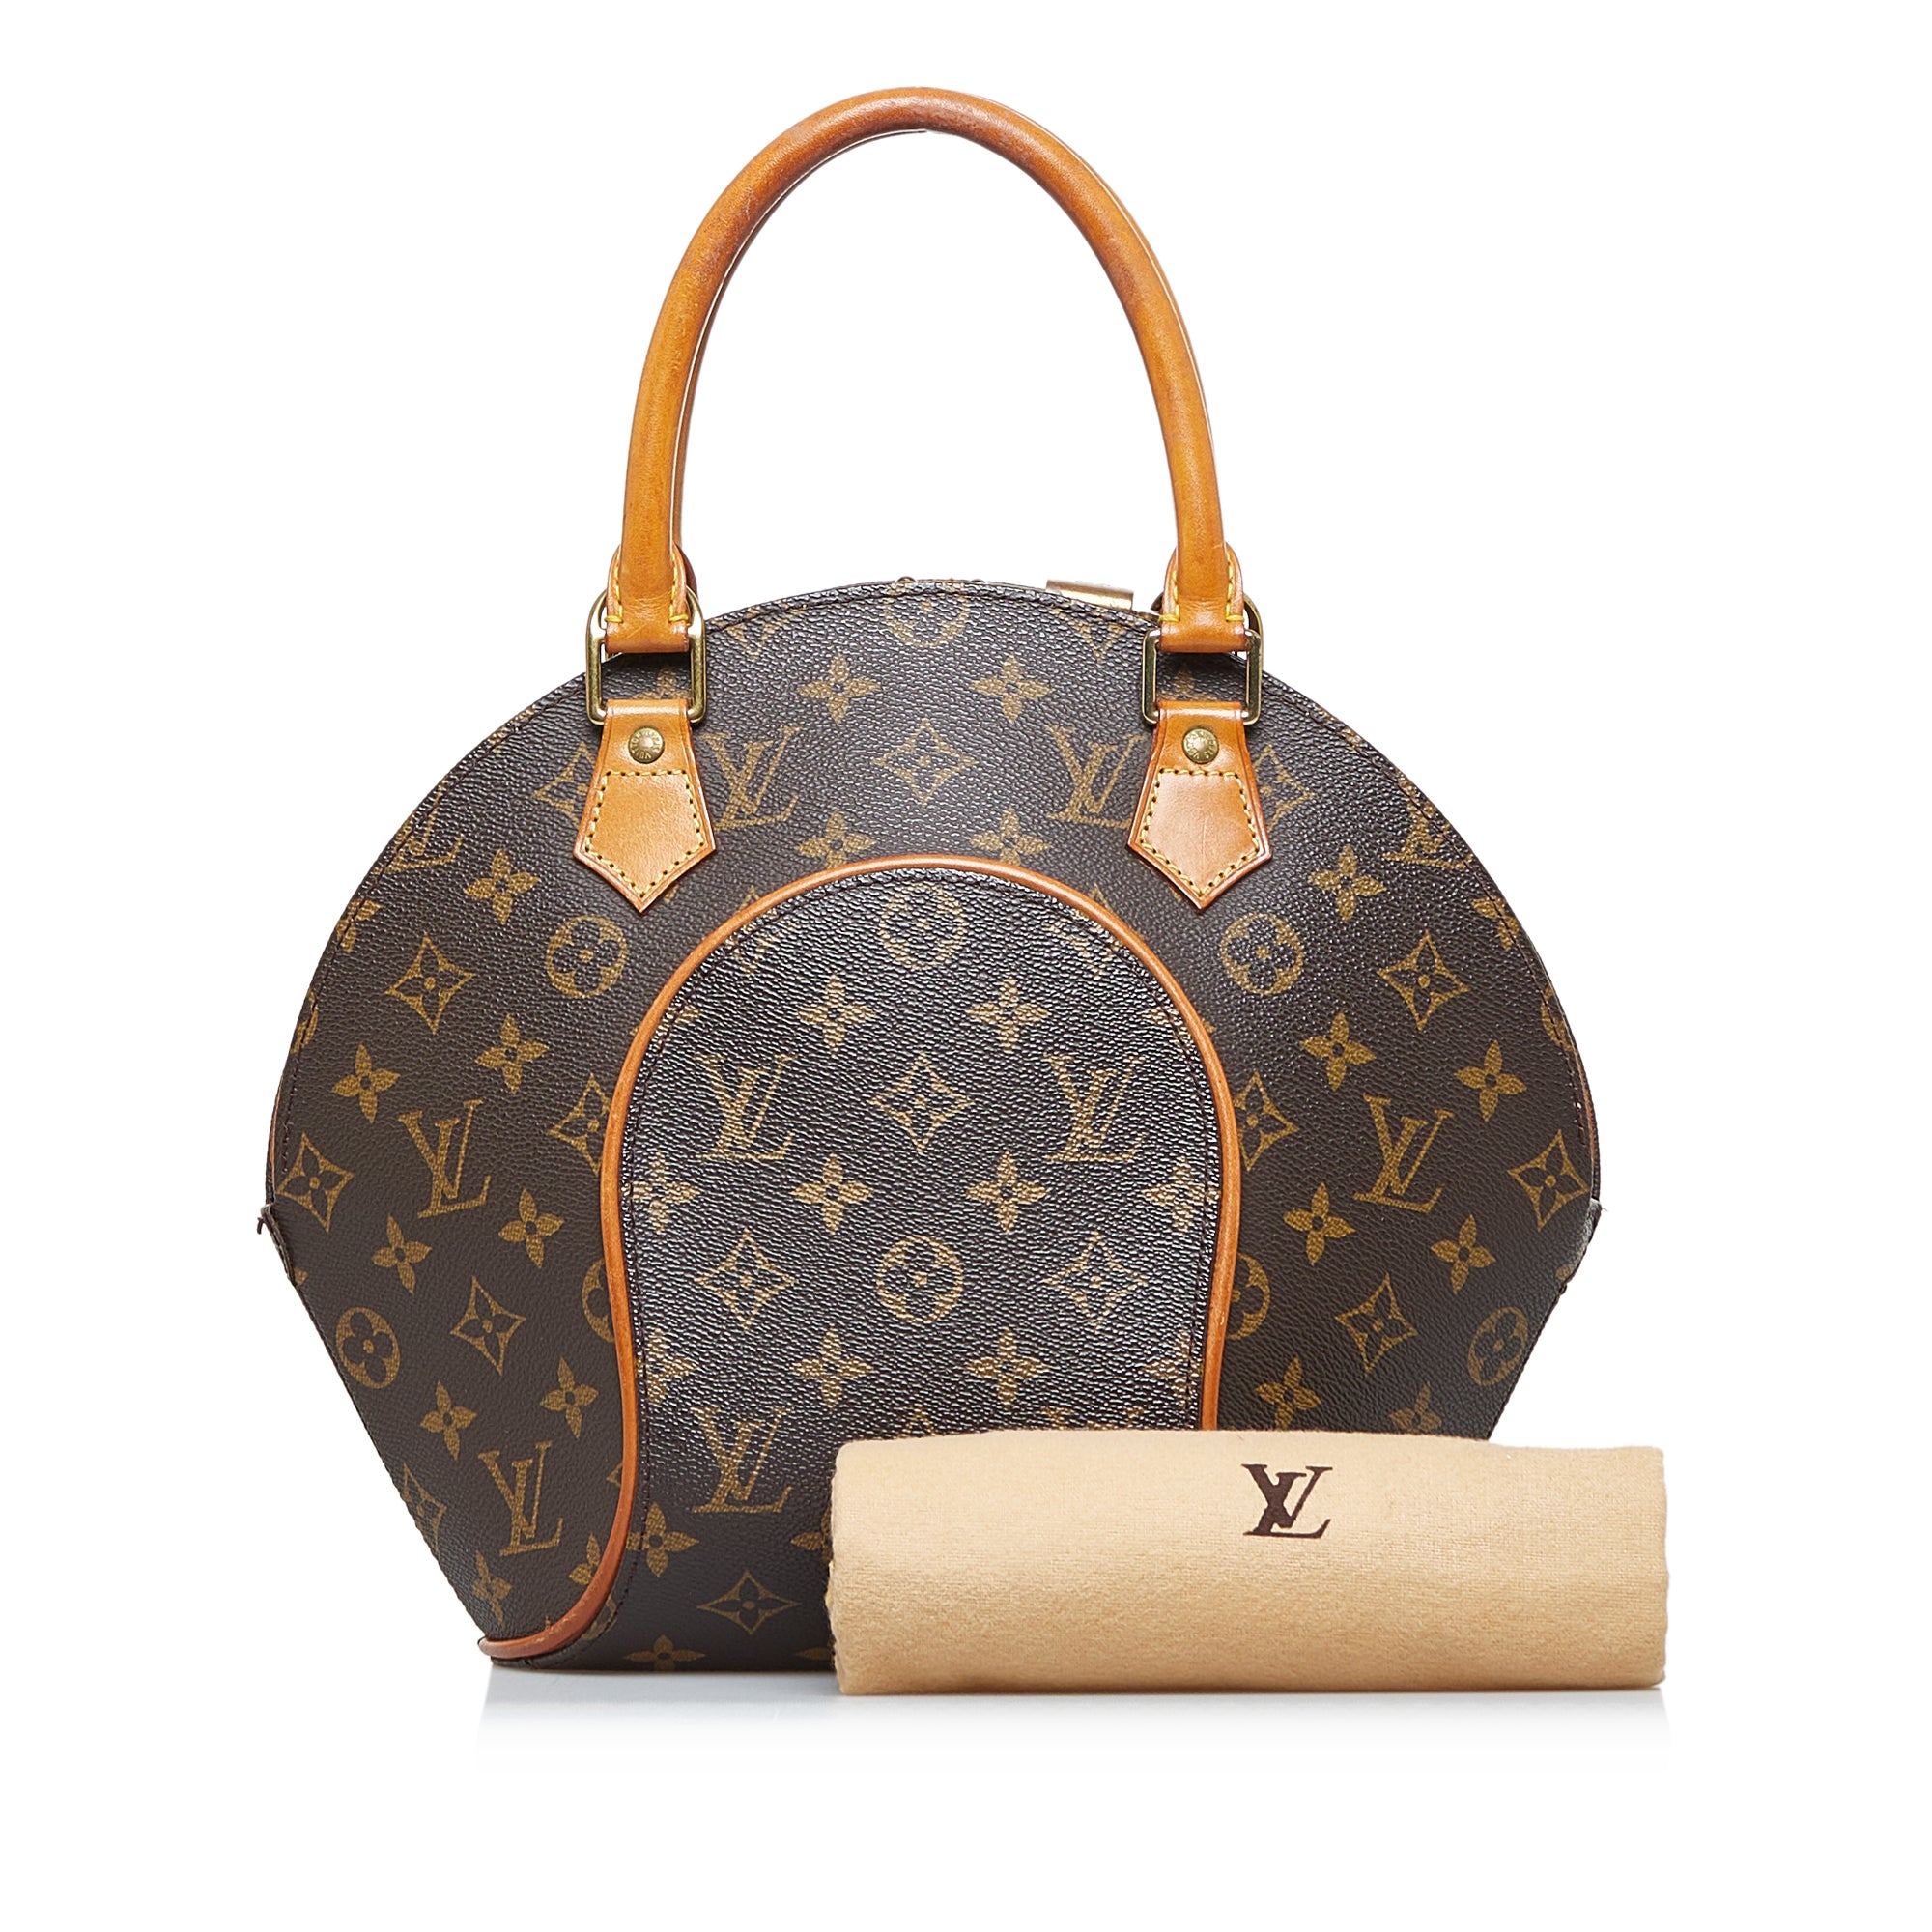 Please help authenticate this bag LV Alma BB monogram. : r/Louisvuitton